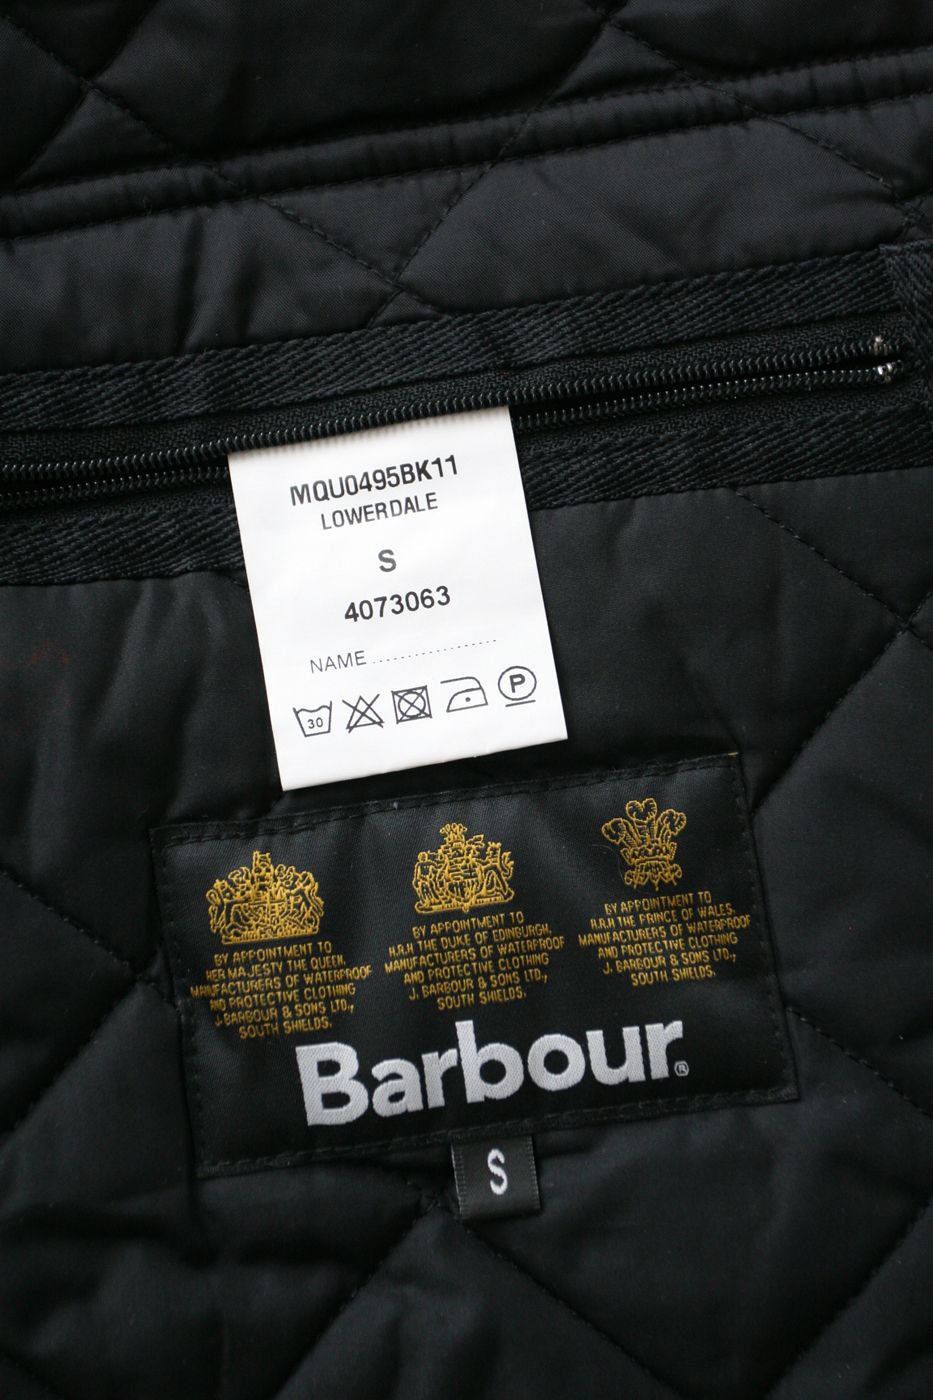 Barbour Barbour England Lowerdale Black Quilted Gilet Vest S Size US S / EU 44-46 / 1 - 8 Thumbnail